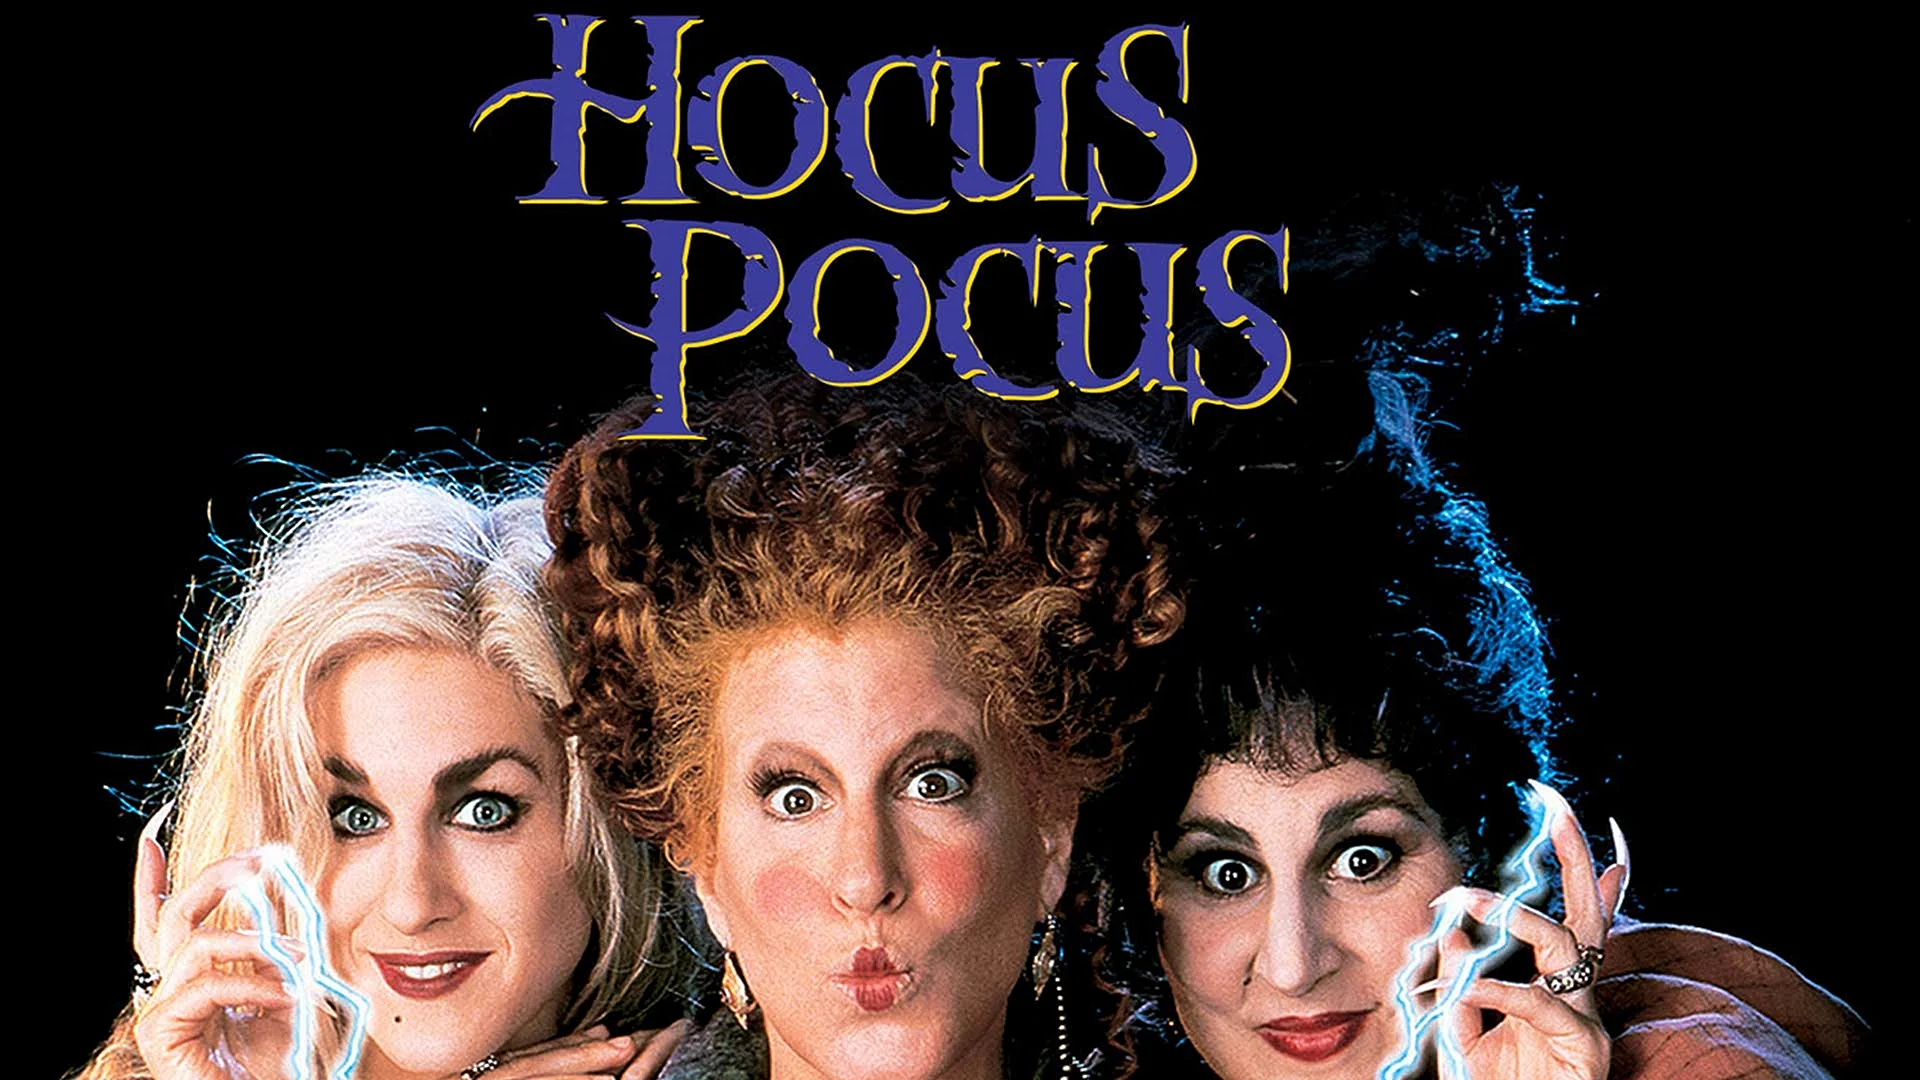 Hocus Pocus 1993 Kathy Najimy Wallpaper